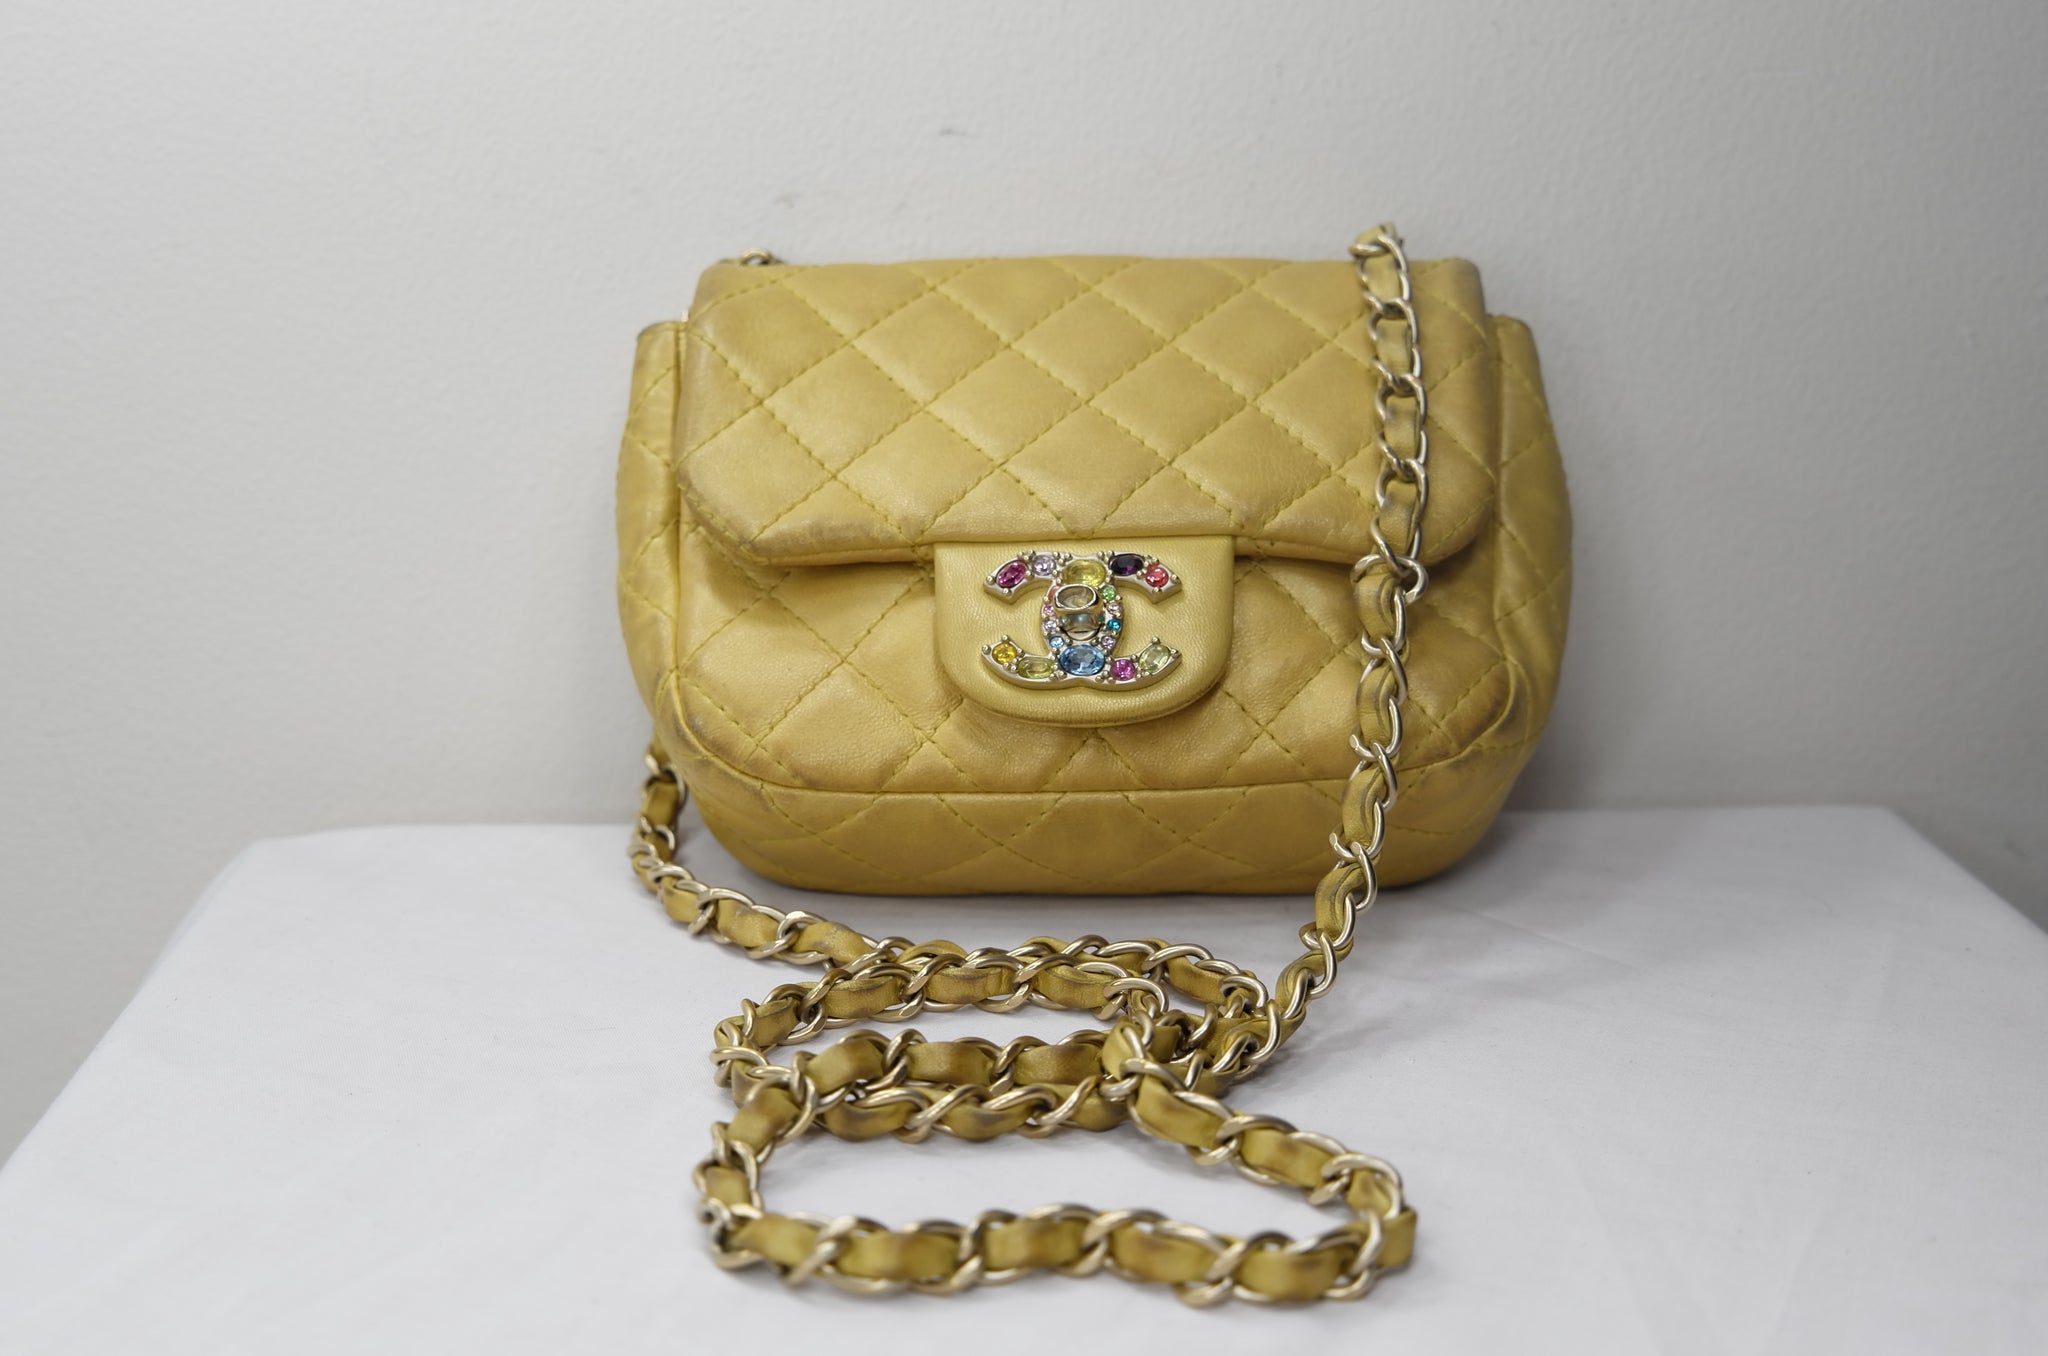 CHANEL, Bags, Chanel Rare Rectangular Precious Gem Jewel Black Pink  Quilted Bijoux Gold Bag